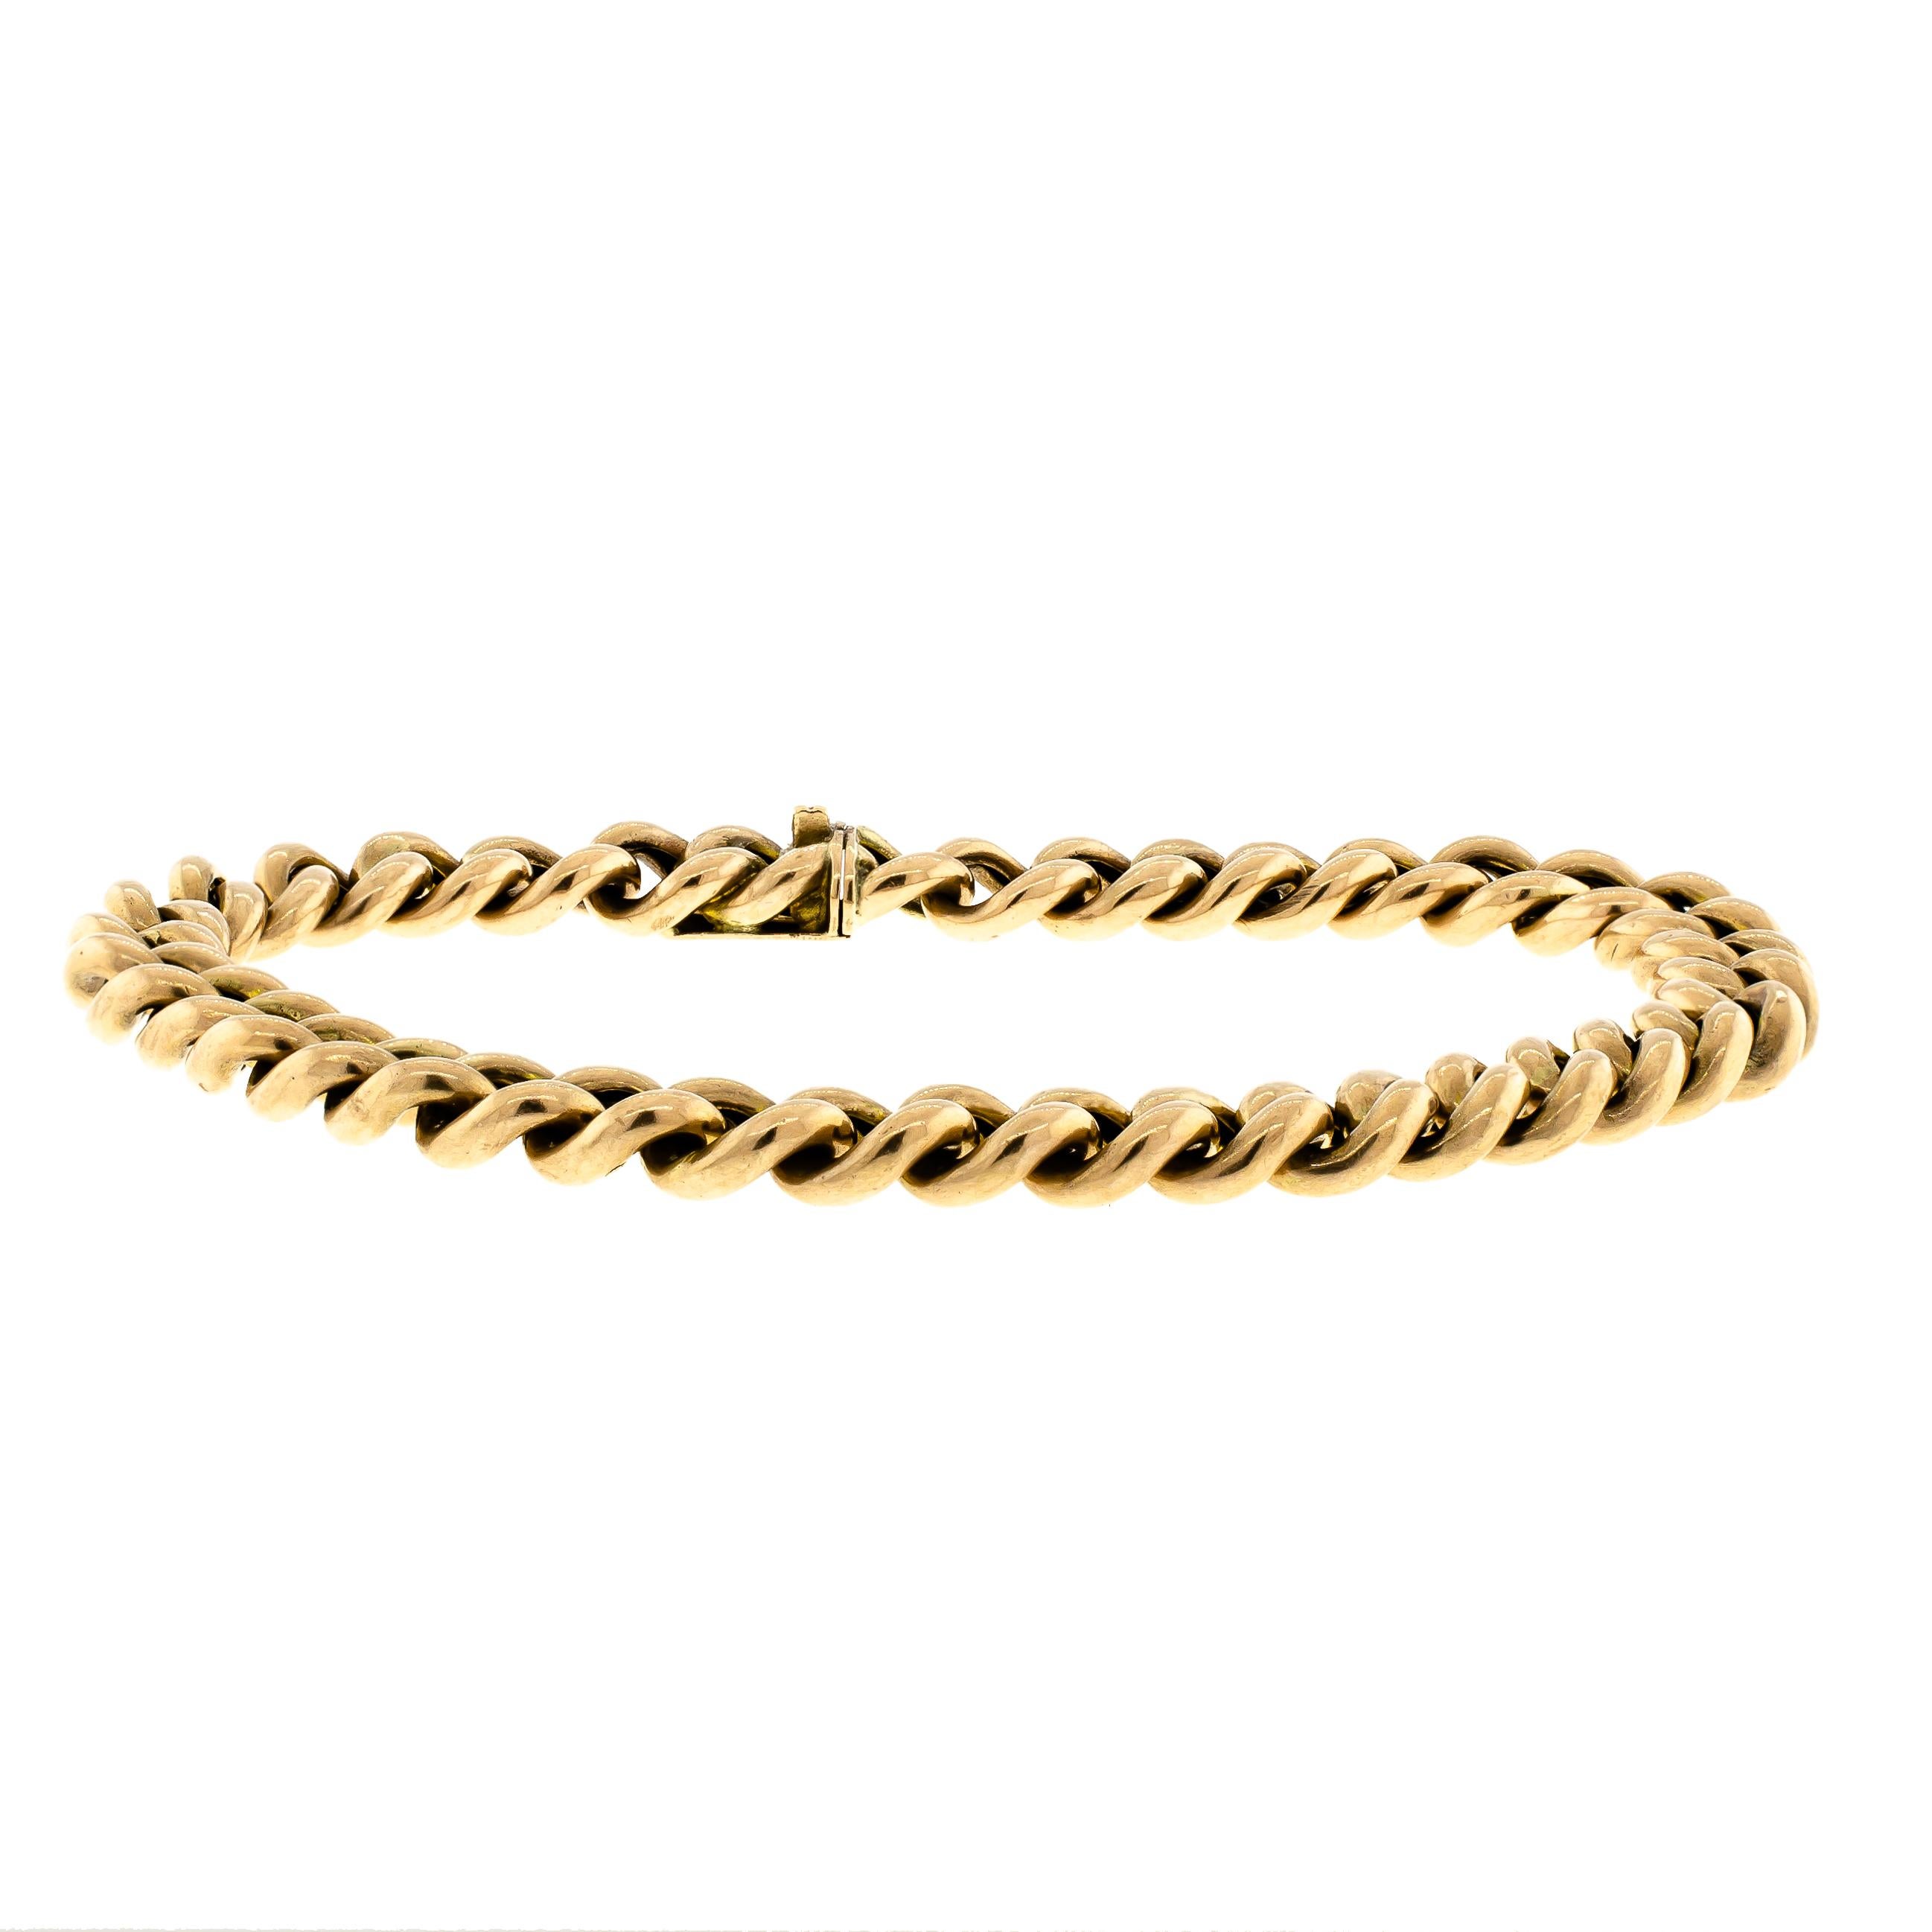 Women's or Men's English 9 Carat Yellow Gold Curb Link Bracelet, circa 1900